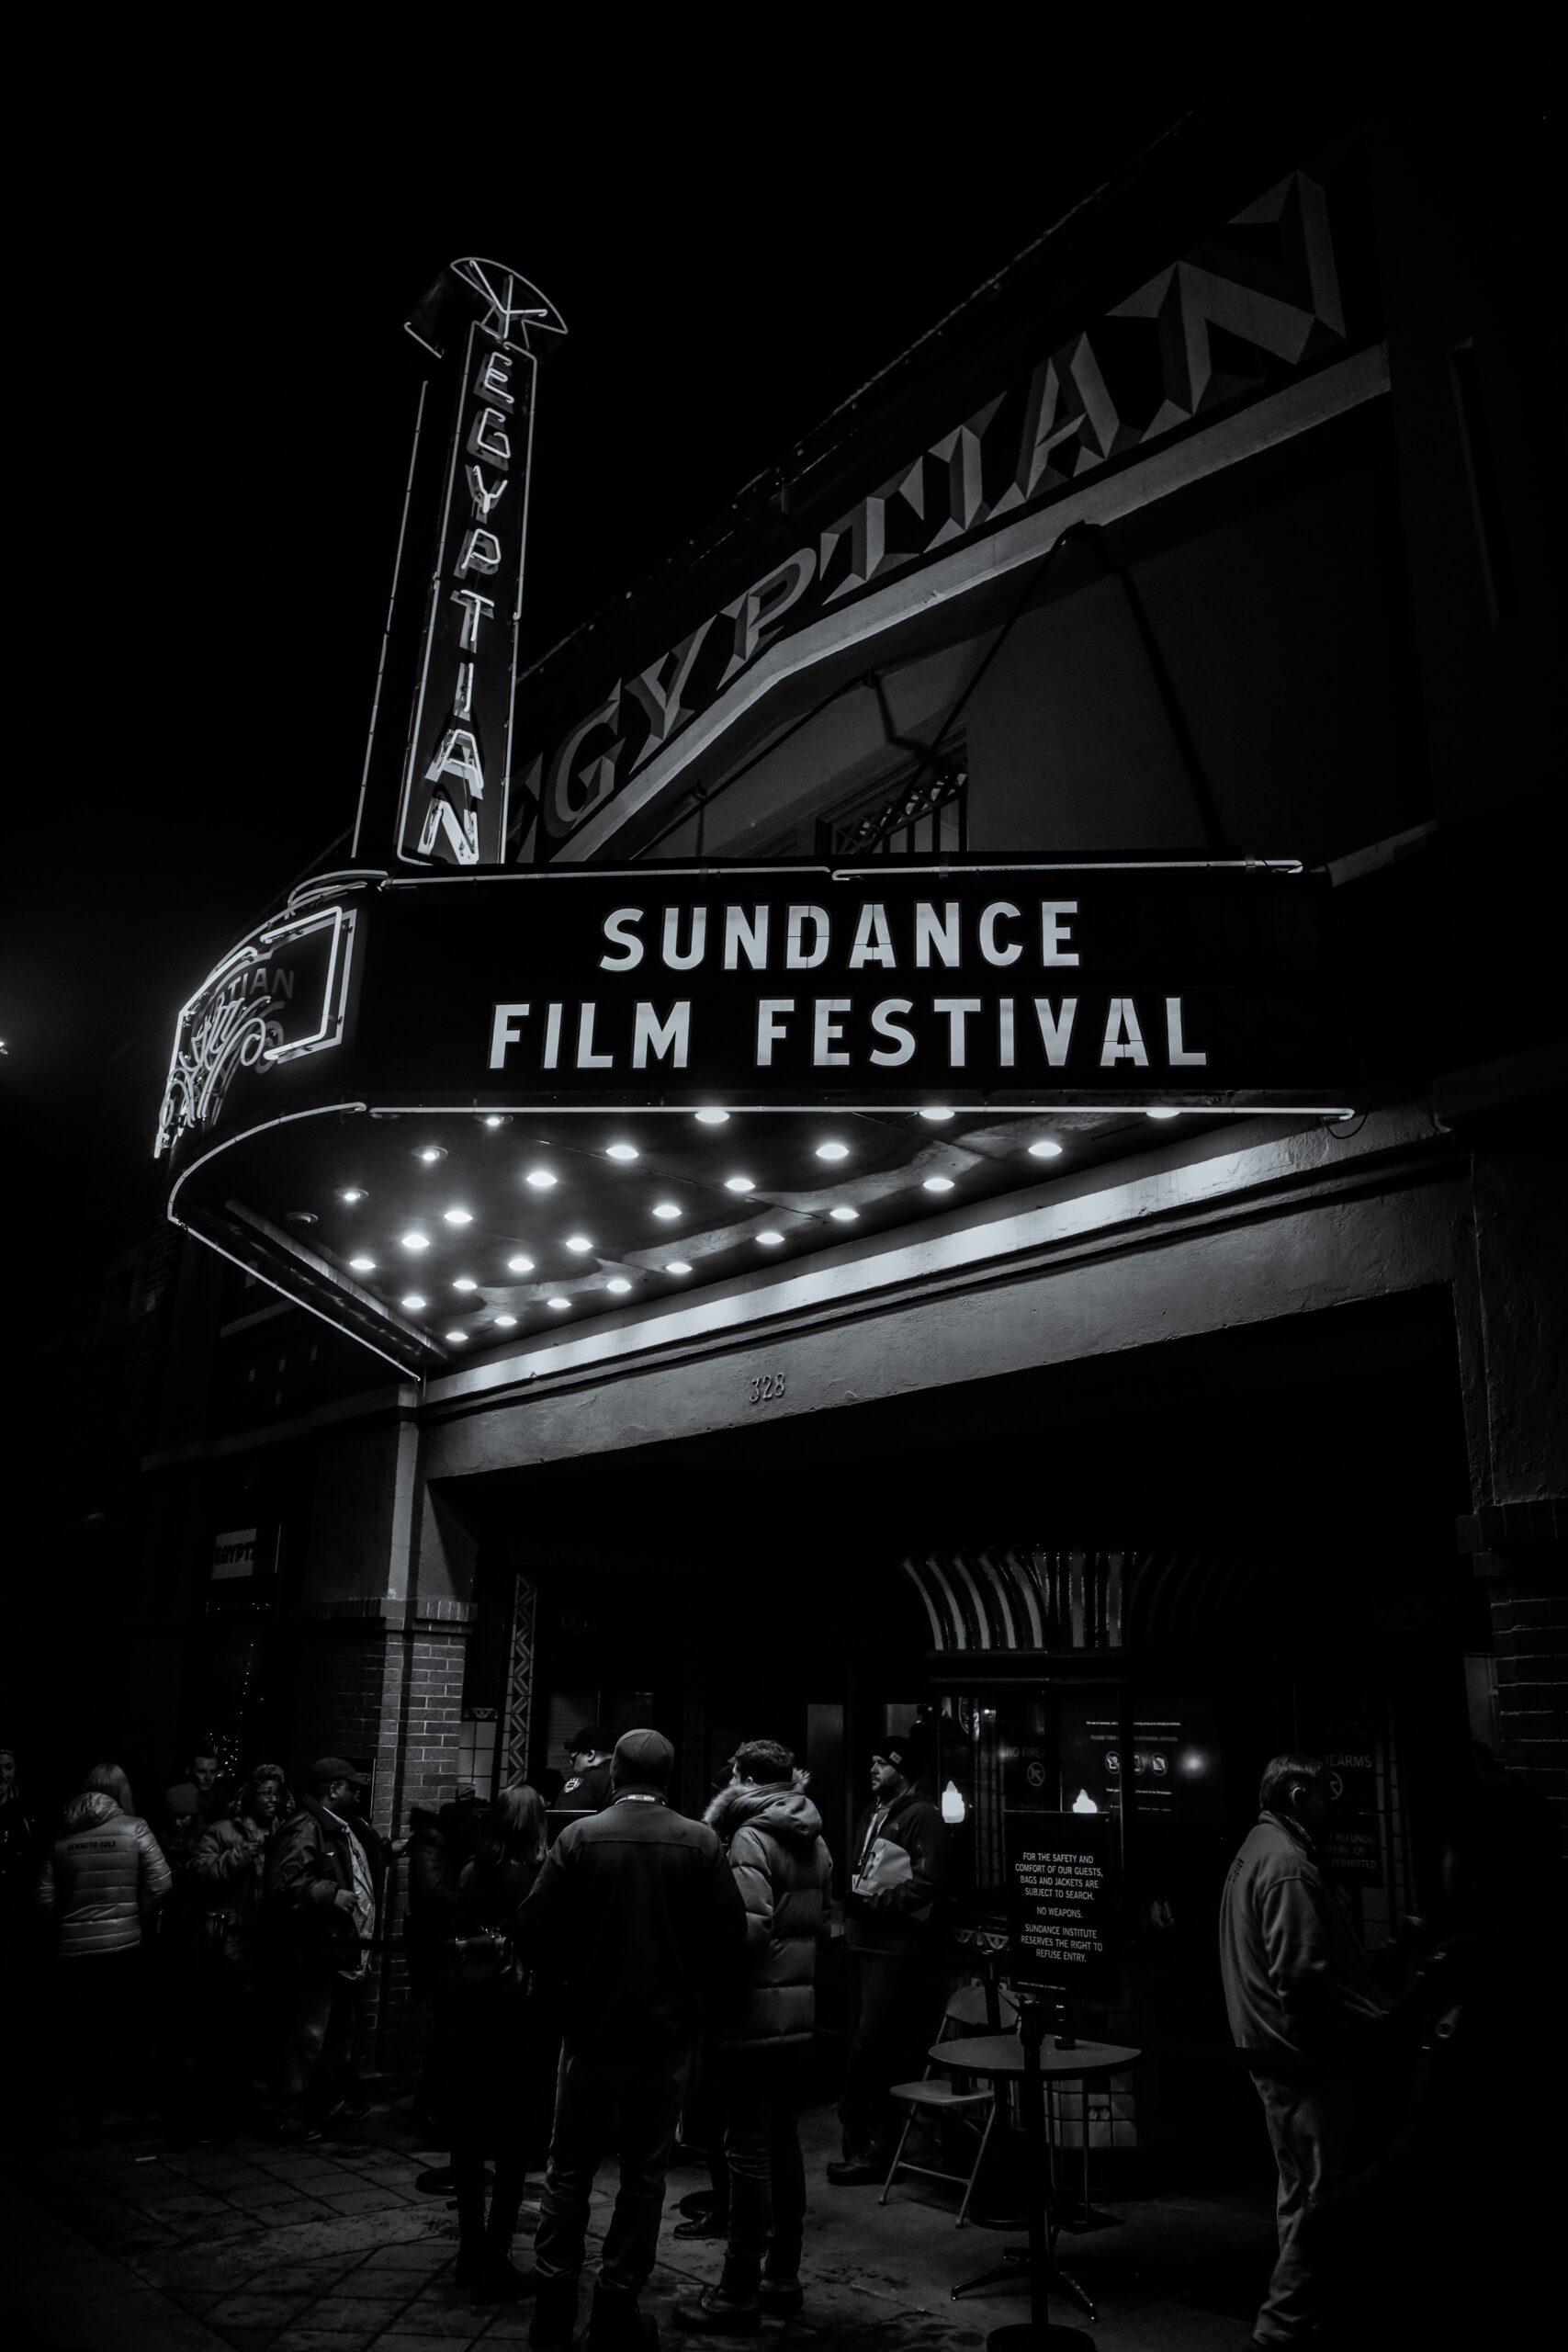 Grayscale image of the sundance film festival image